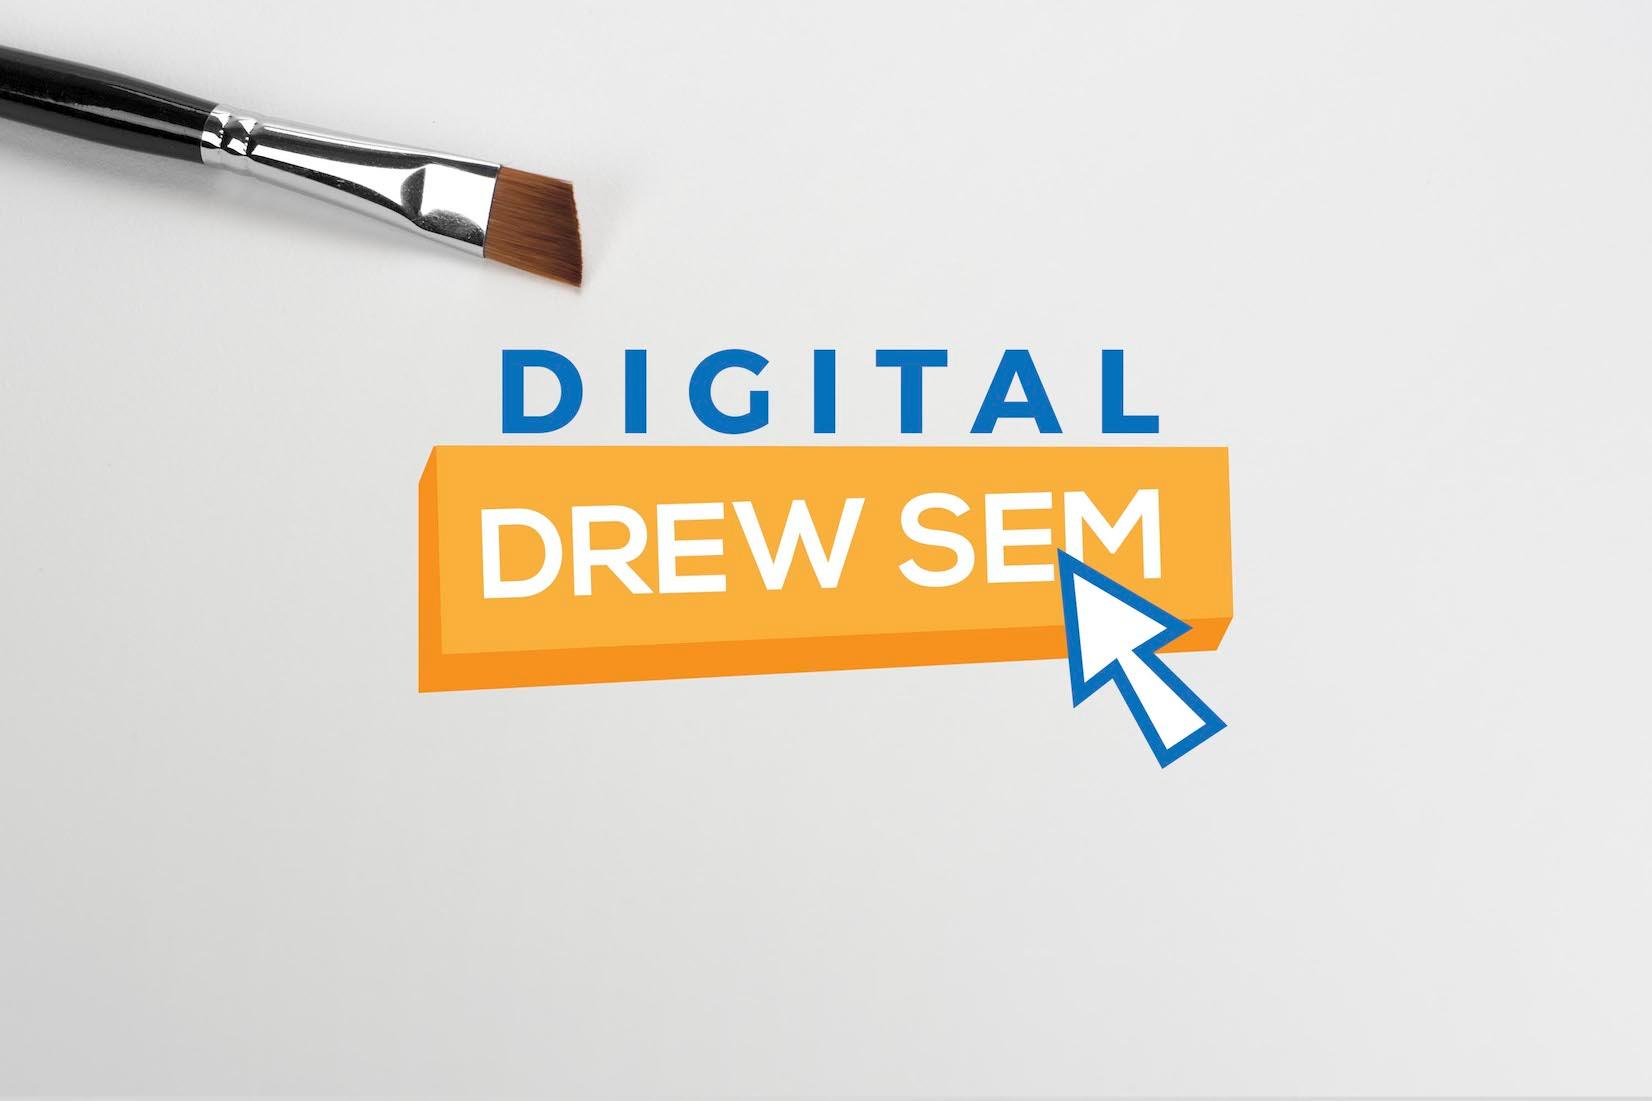 Digital Drew SEM New York (609)865-7672